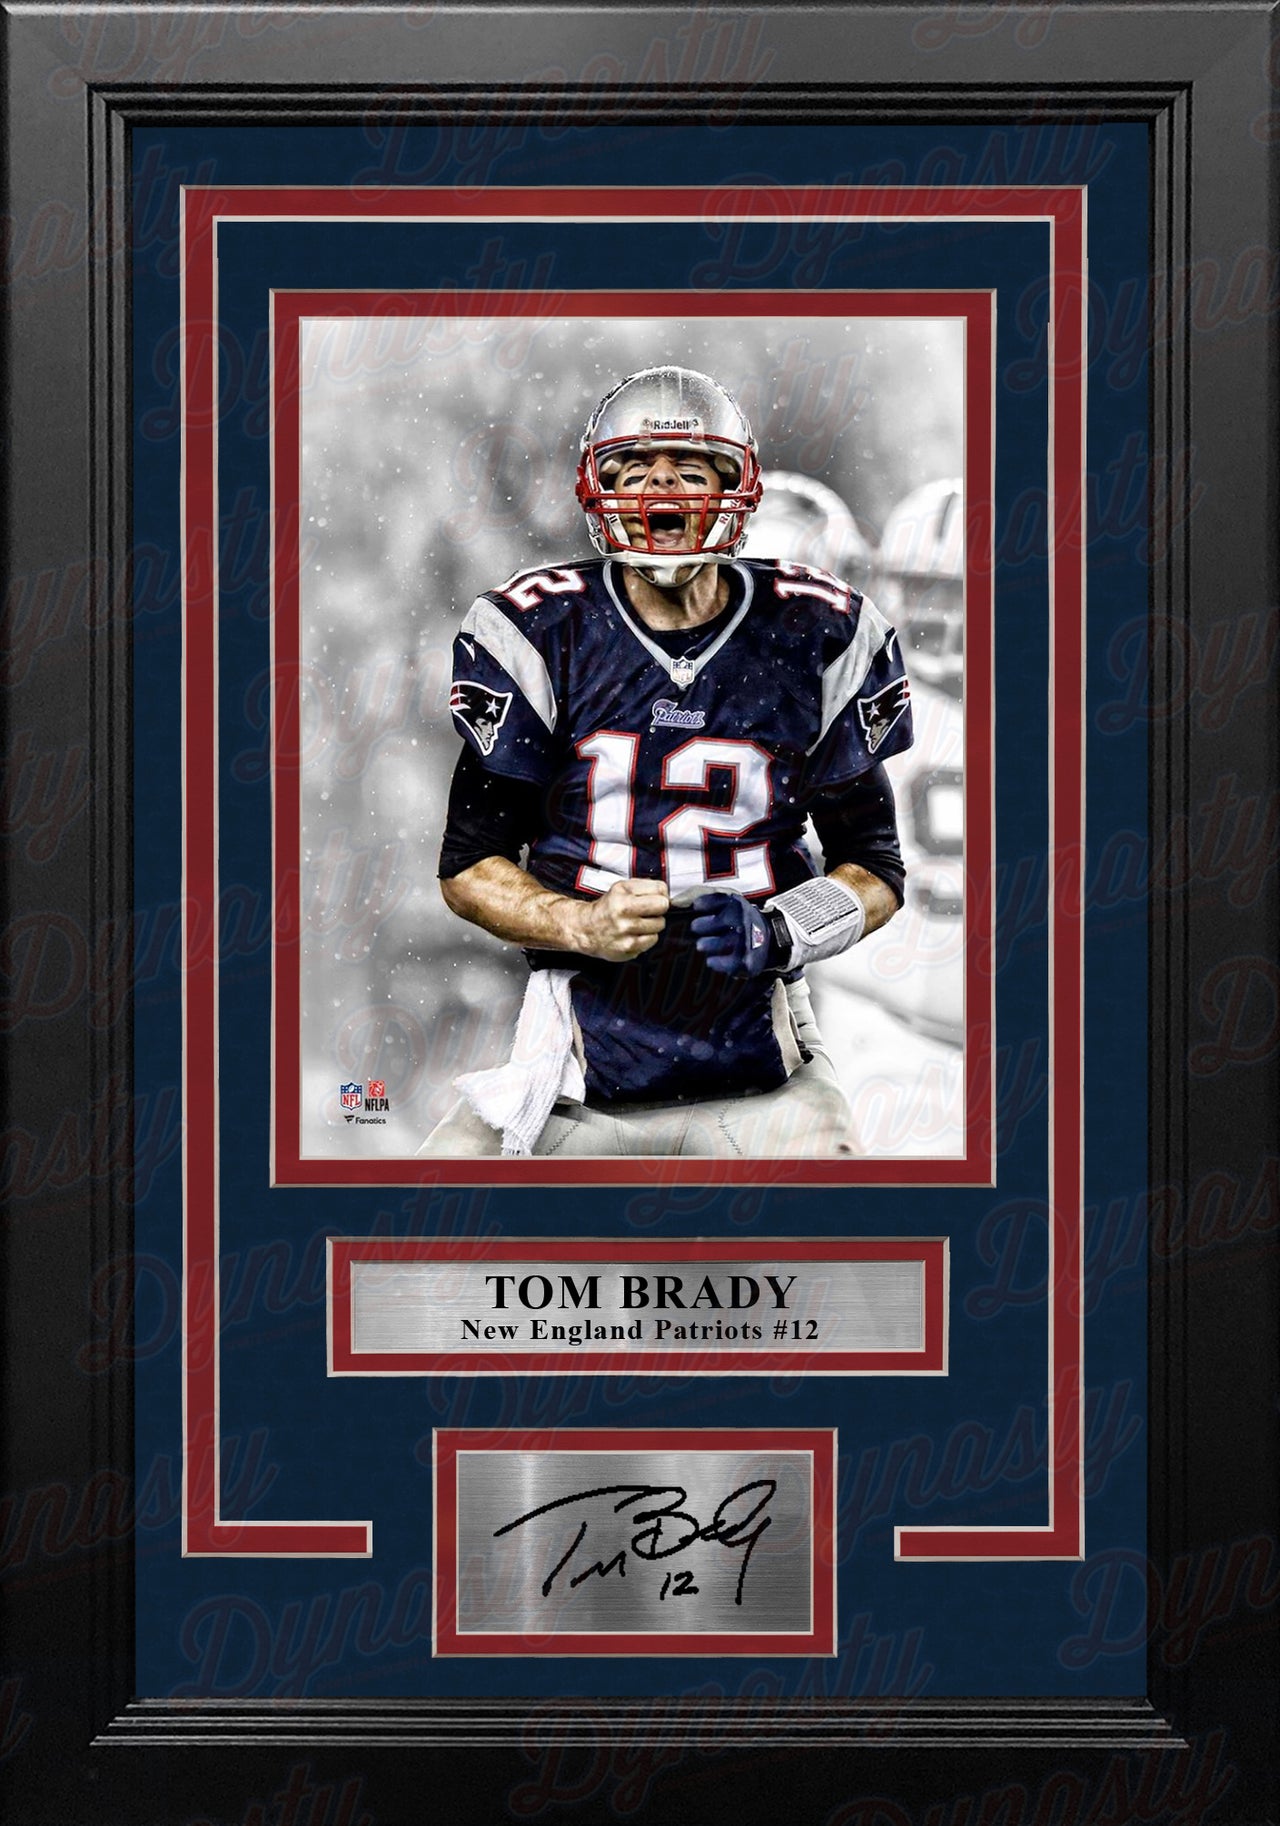 Tom Brady Scream Spotlight New England Patriots 8" x 10" Framed Football Photo with Engraved Autograph - Dynasty Sports & Framing 